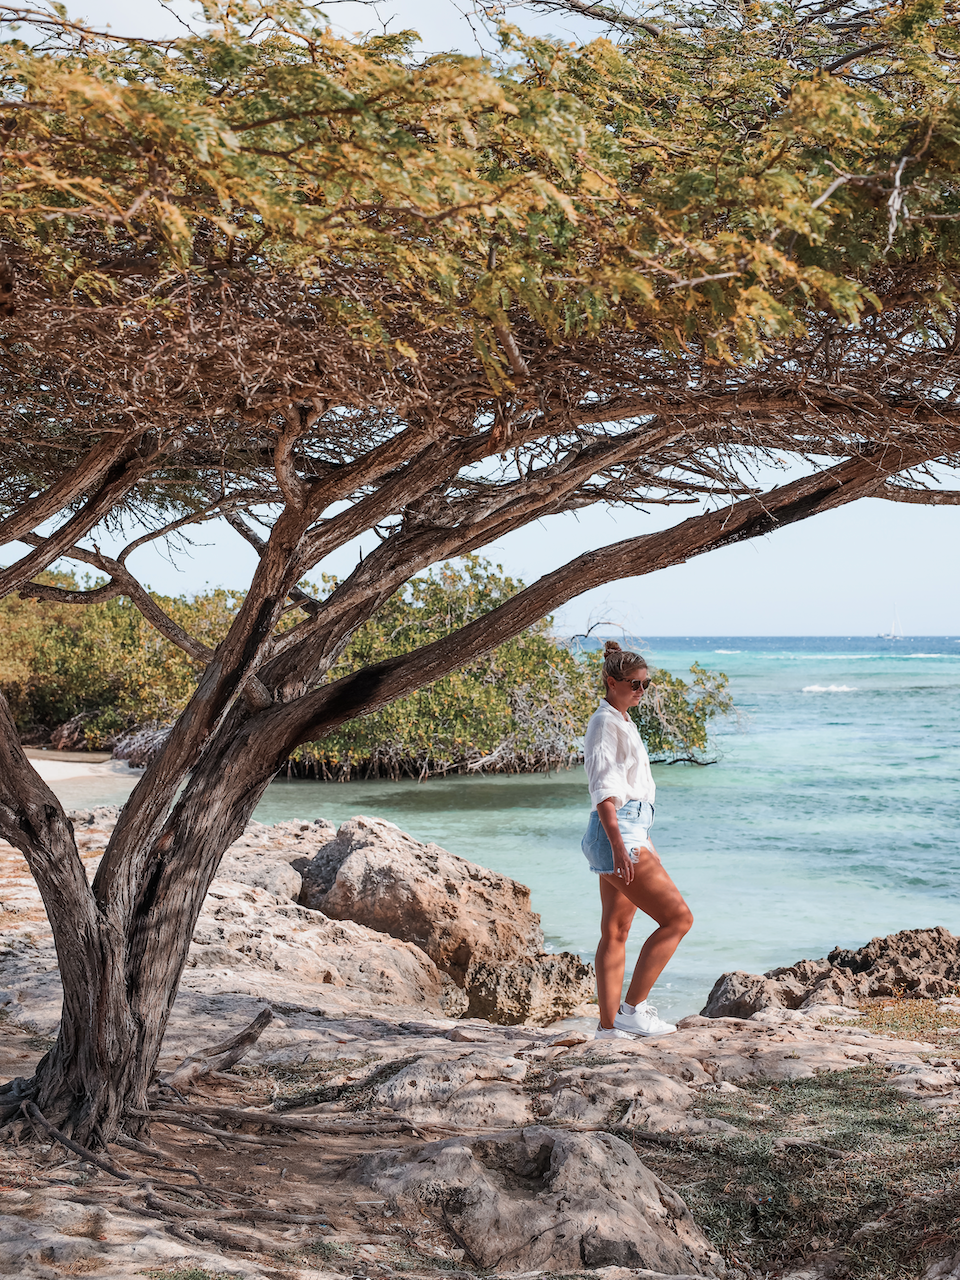 Prendre la pose devant la plage de Santo Largo - Aruba - Îles ABC - Caraïbes